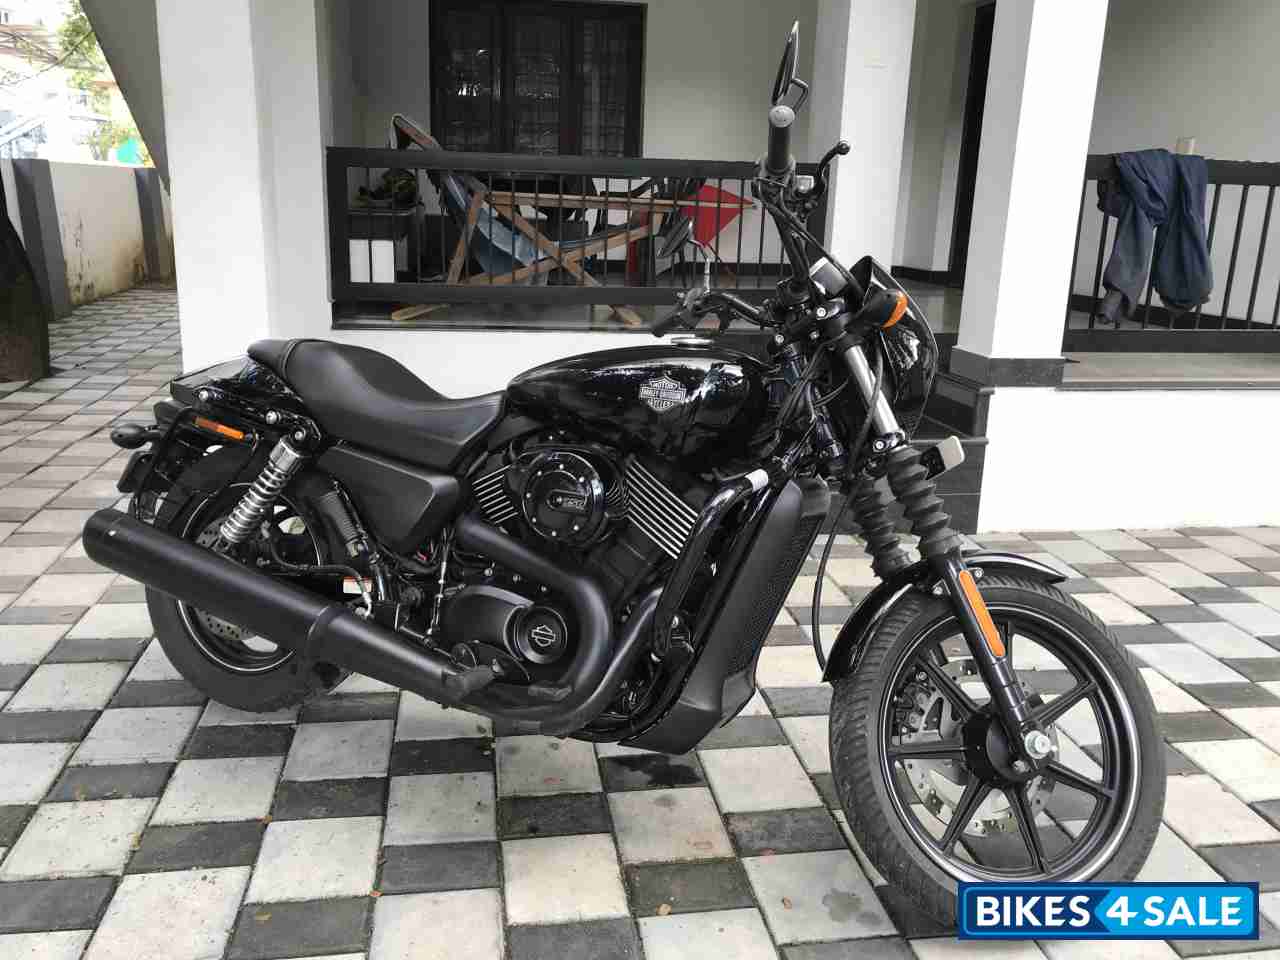 Used 2014 Model Harley Davidson Street 750 For Sale In Ernakulam Id 159380 Black Colour Bikes4sale